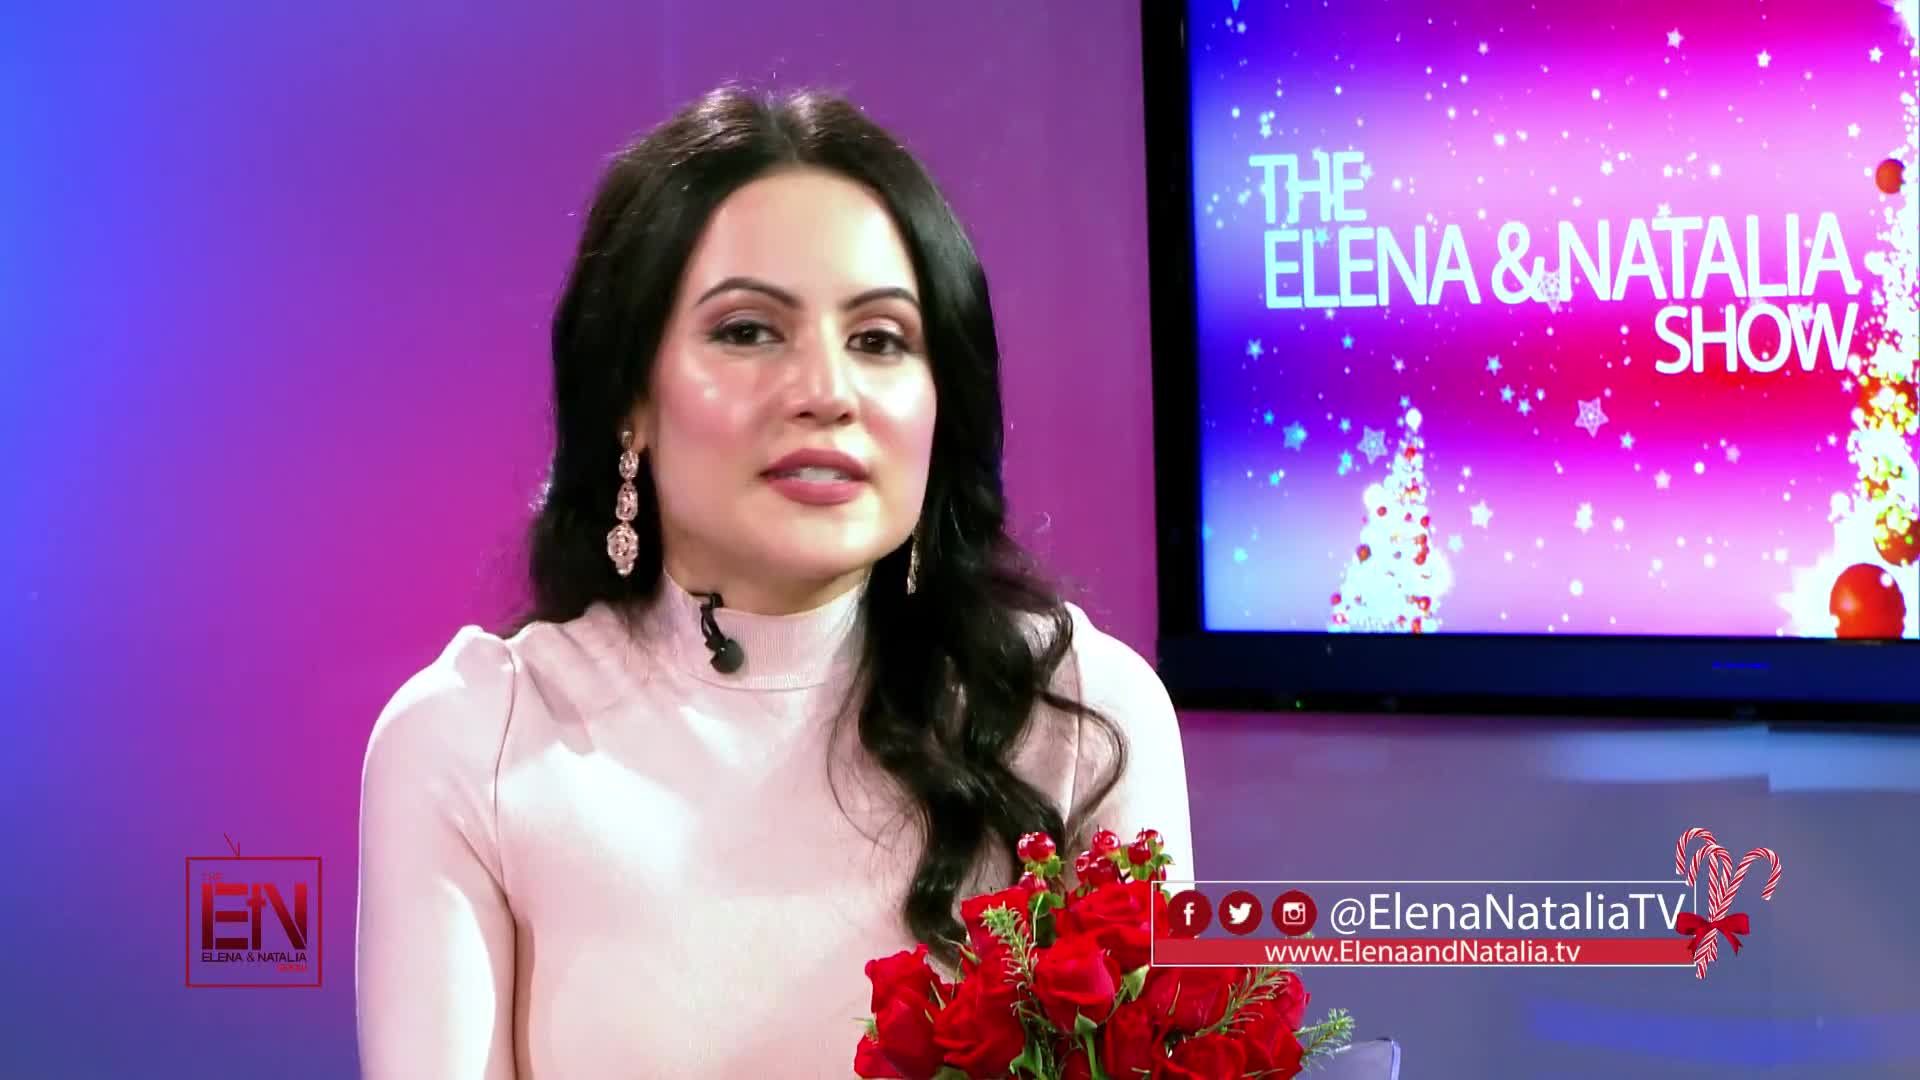 The Elena and Natalia Show - Presence Above Presents